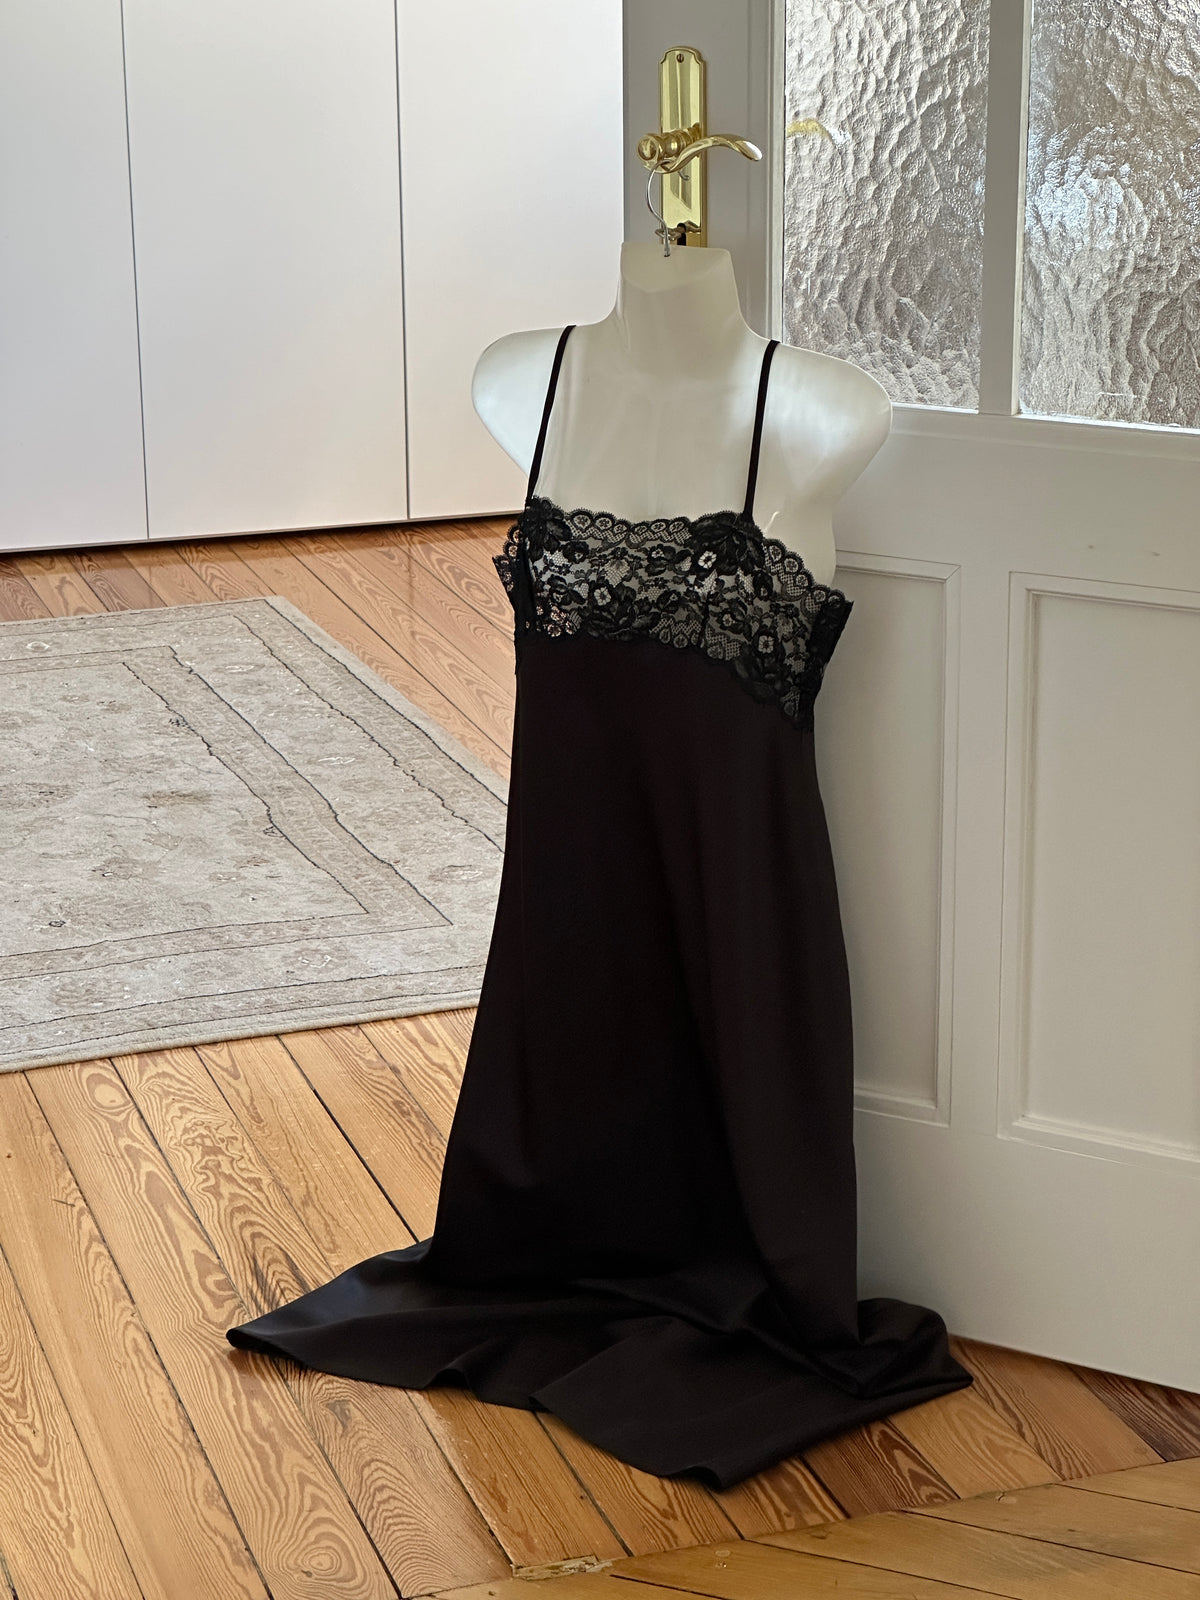 Dior Lingerie Dress (s/m)